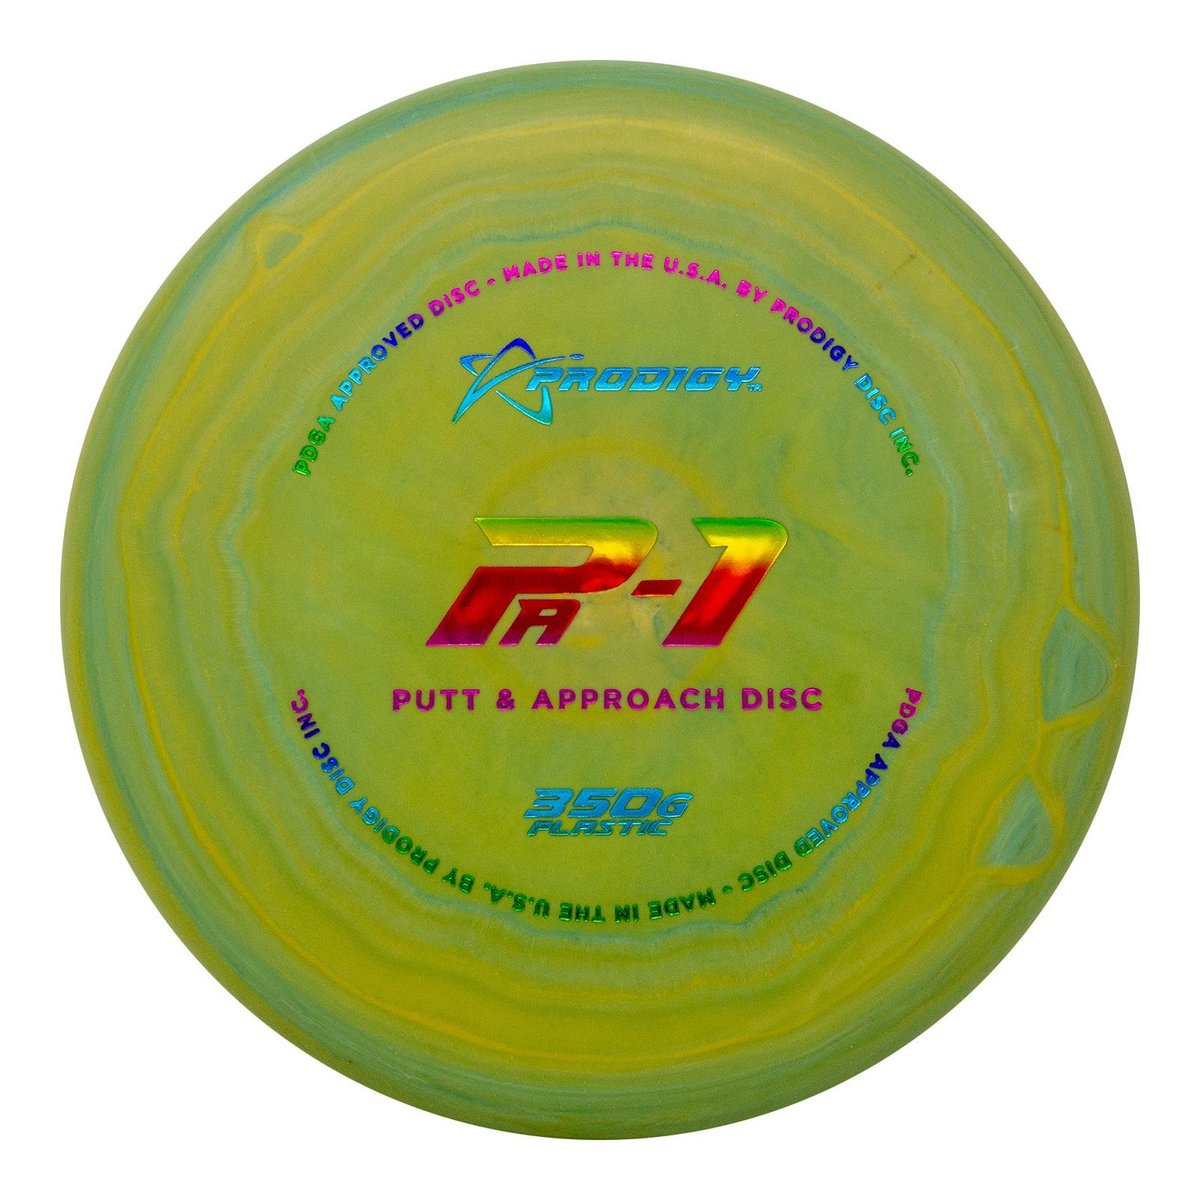 Prodigy PA-1 Putt & Approach Disc - 350G Plastic